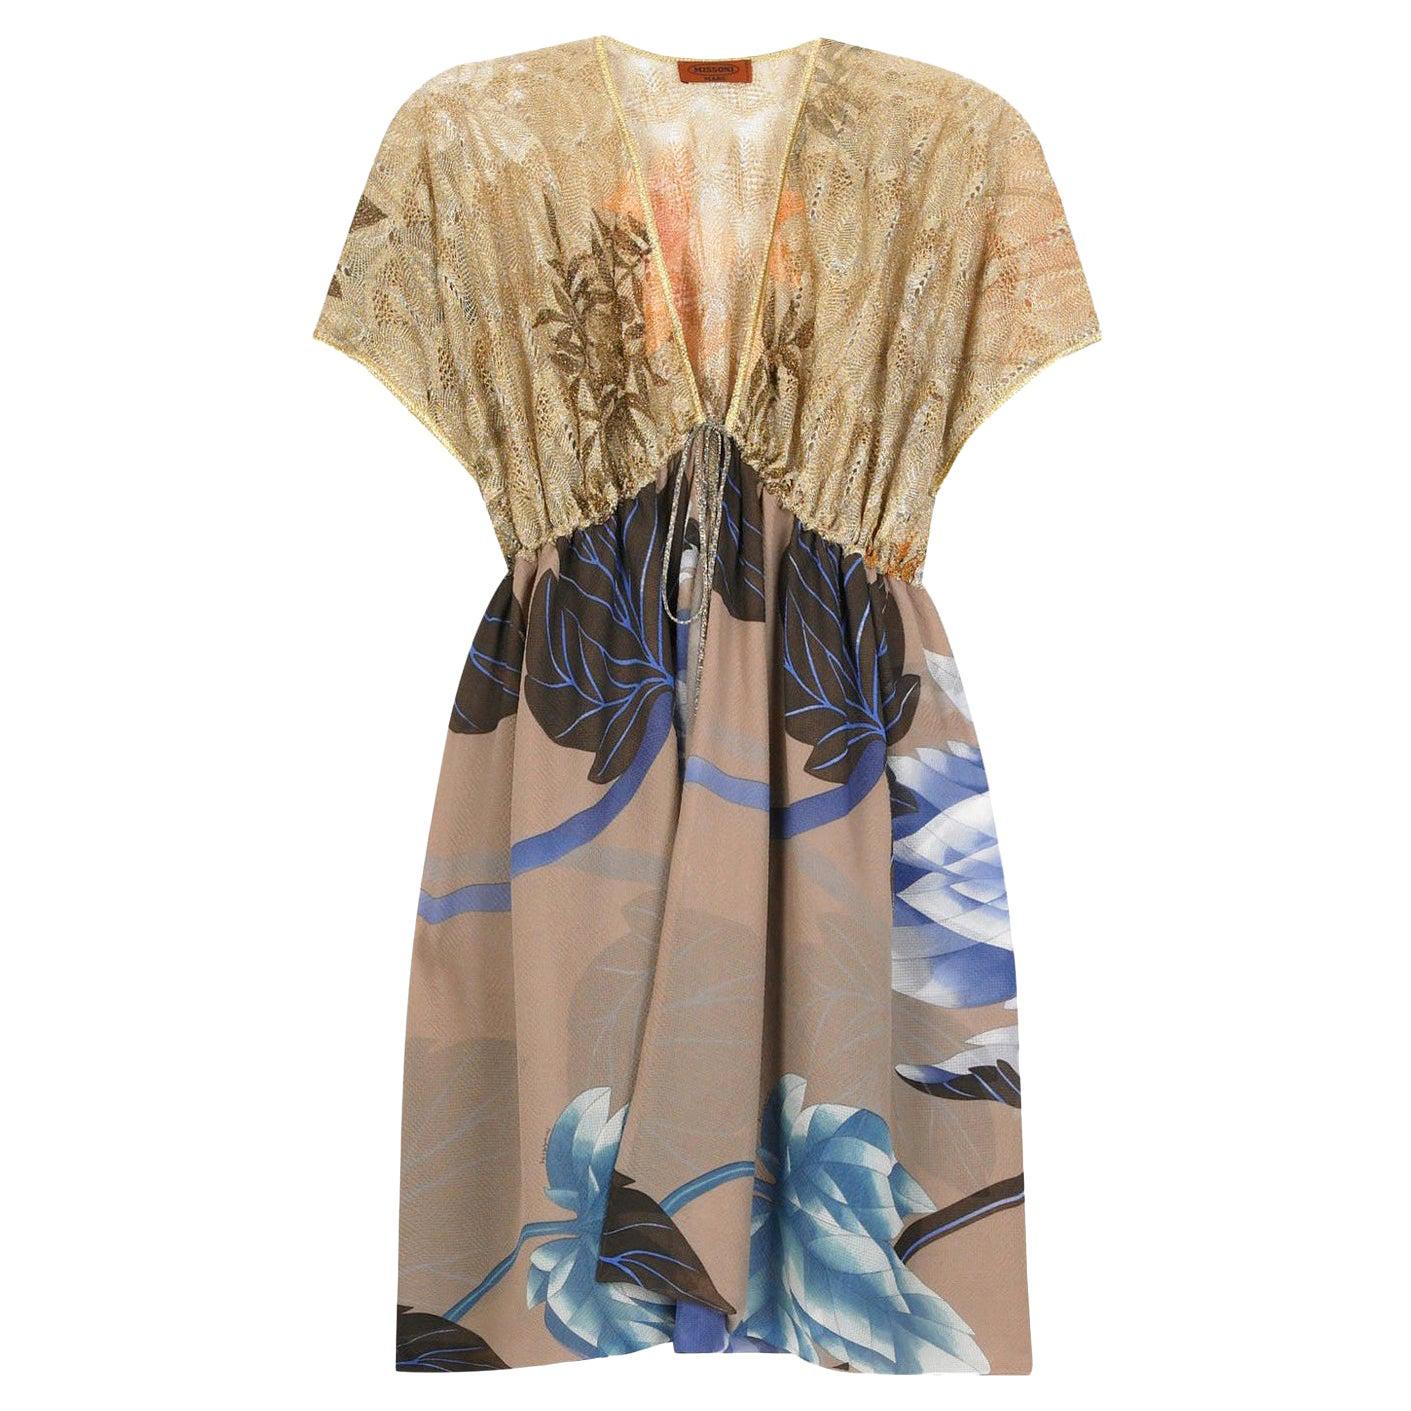 NEW Missoni Gold Metallic Crochet Knit Floral Kaftan Tunic Dress Cover Up 40